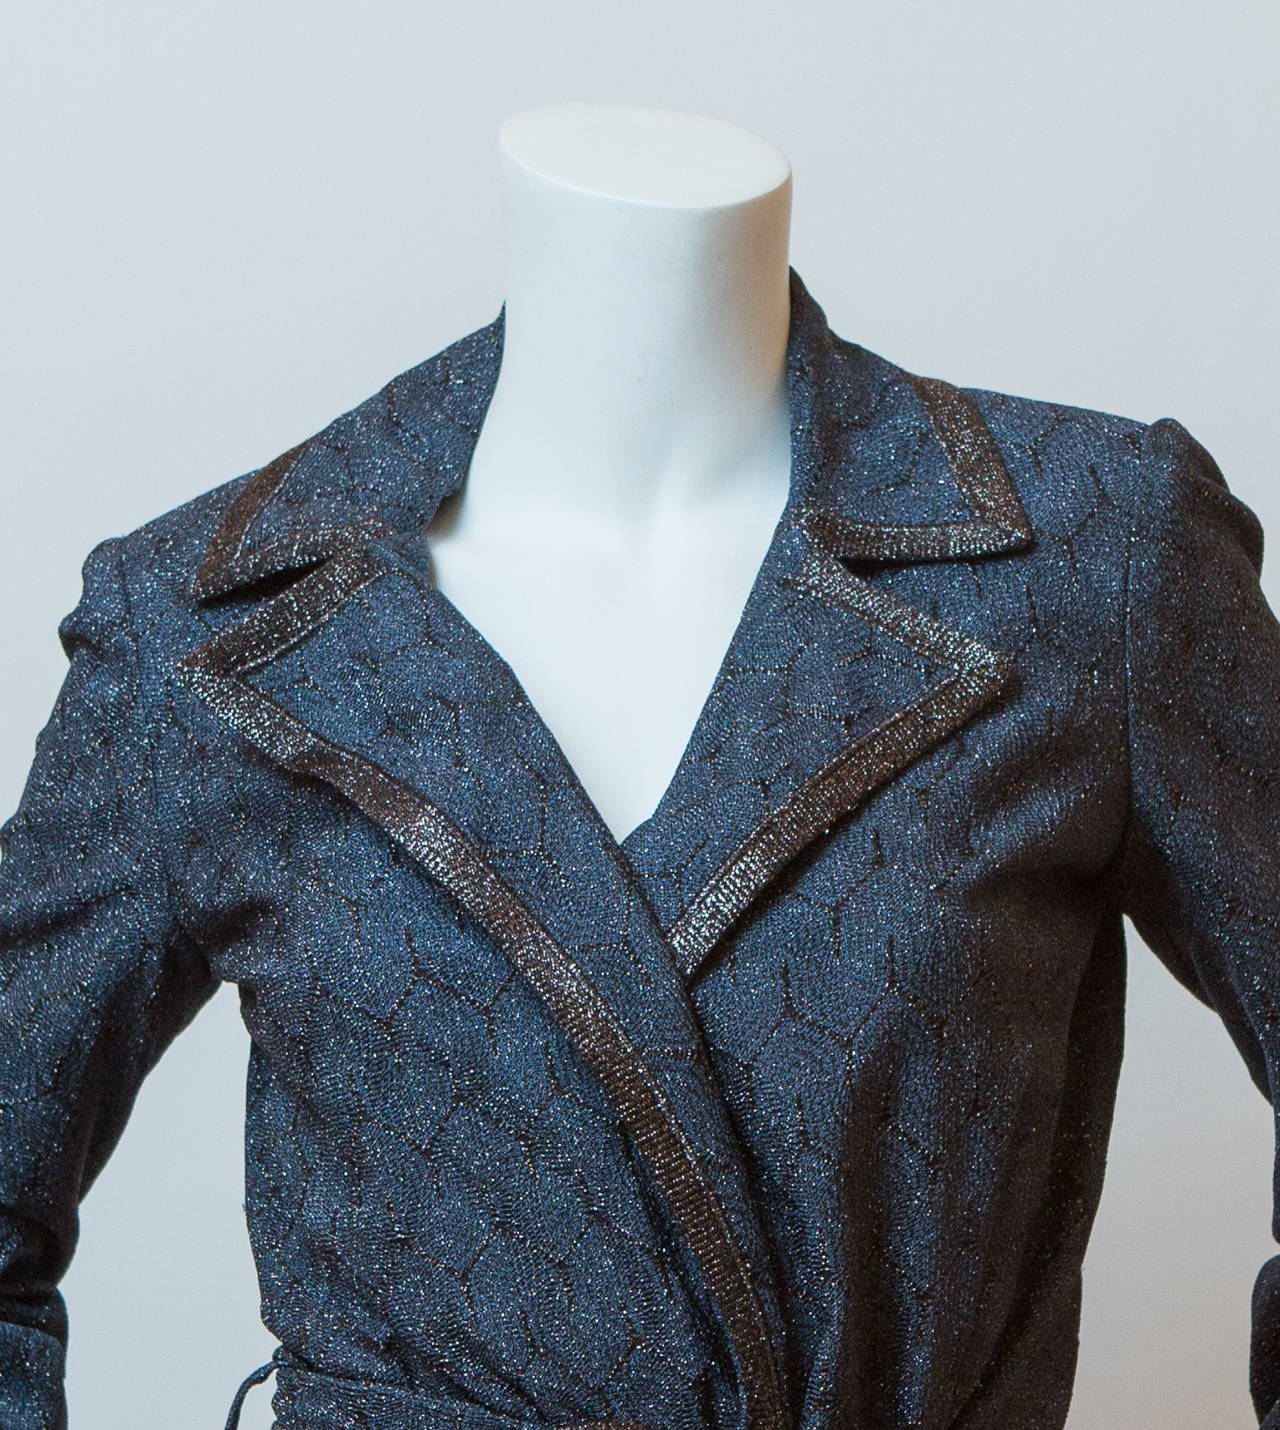 Missoni cobalt blue and bronze belted knit coat.